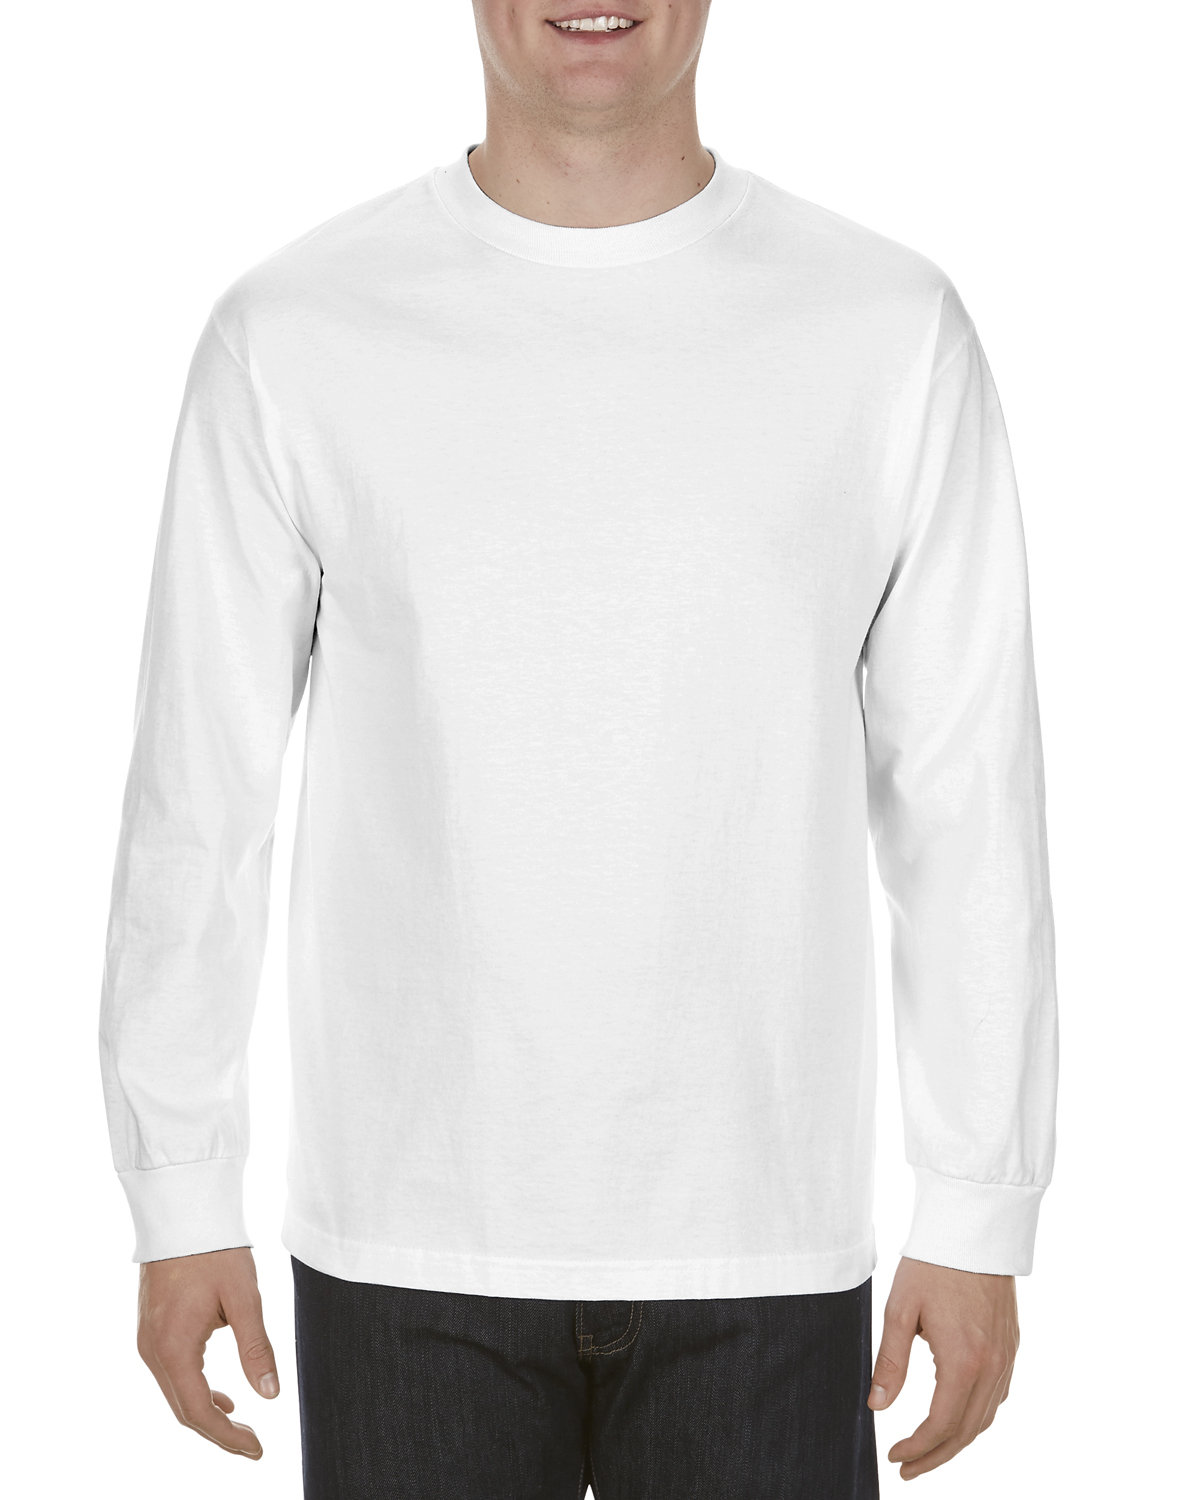 American Apparel Adult Long-Sleeve T-Shirt | alphabroder